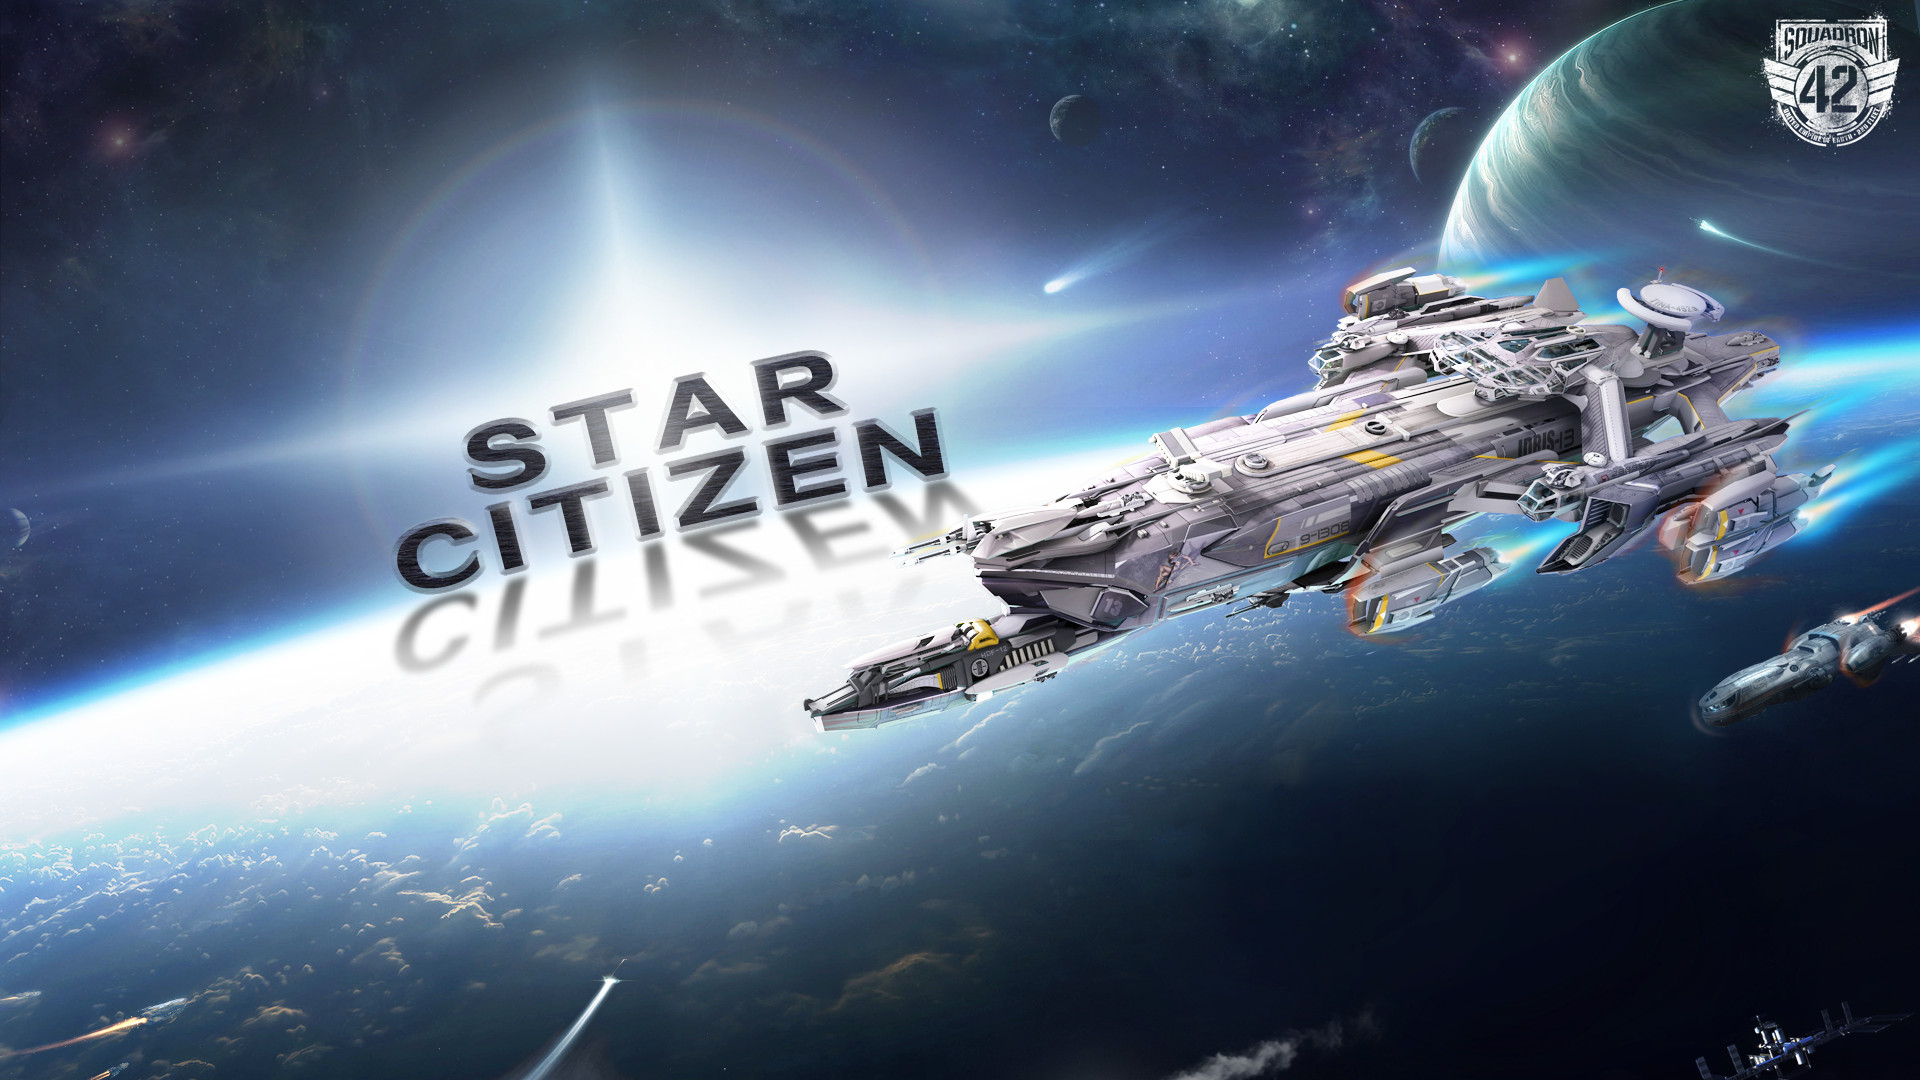 Star citizen: the ultimate sci-fi space videogame